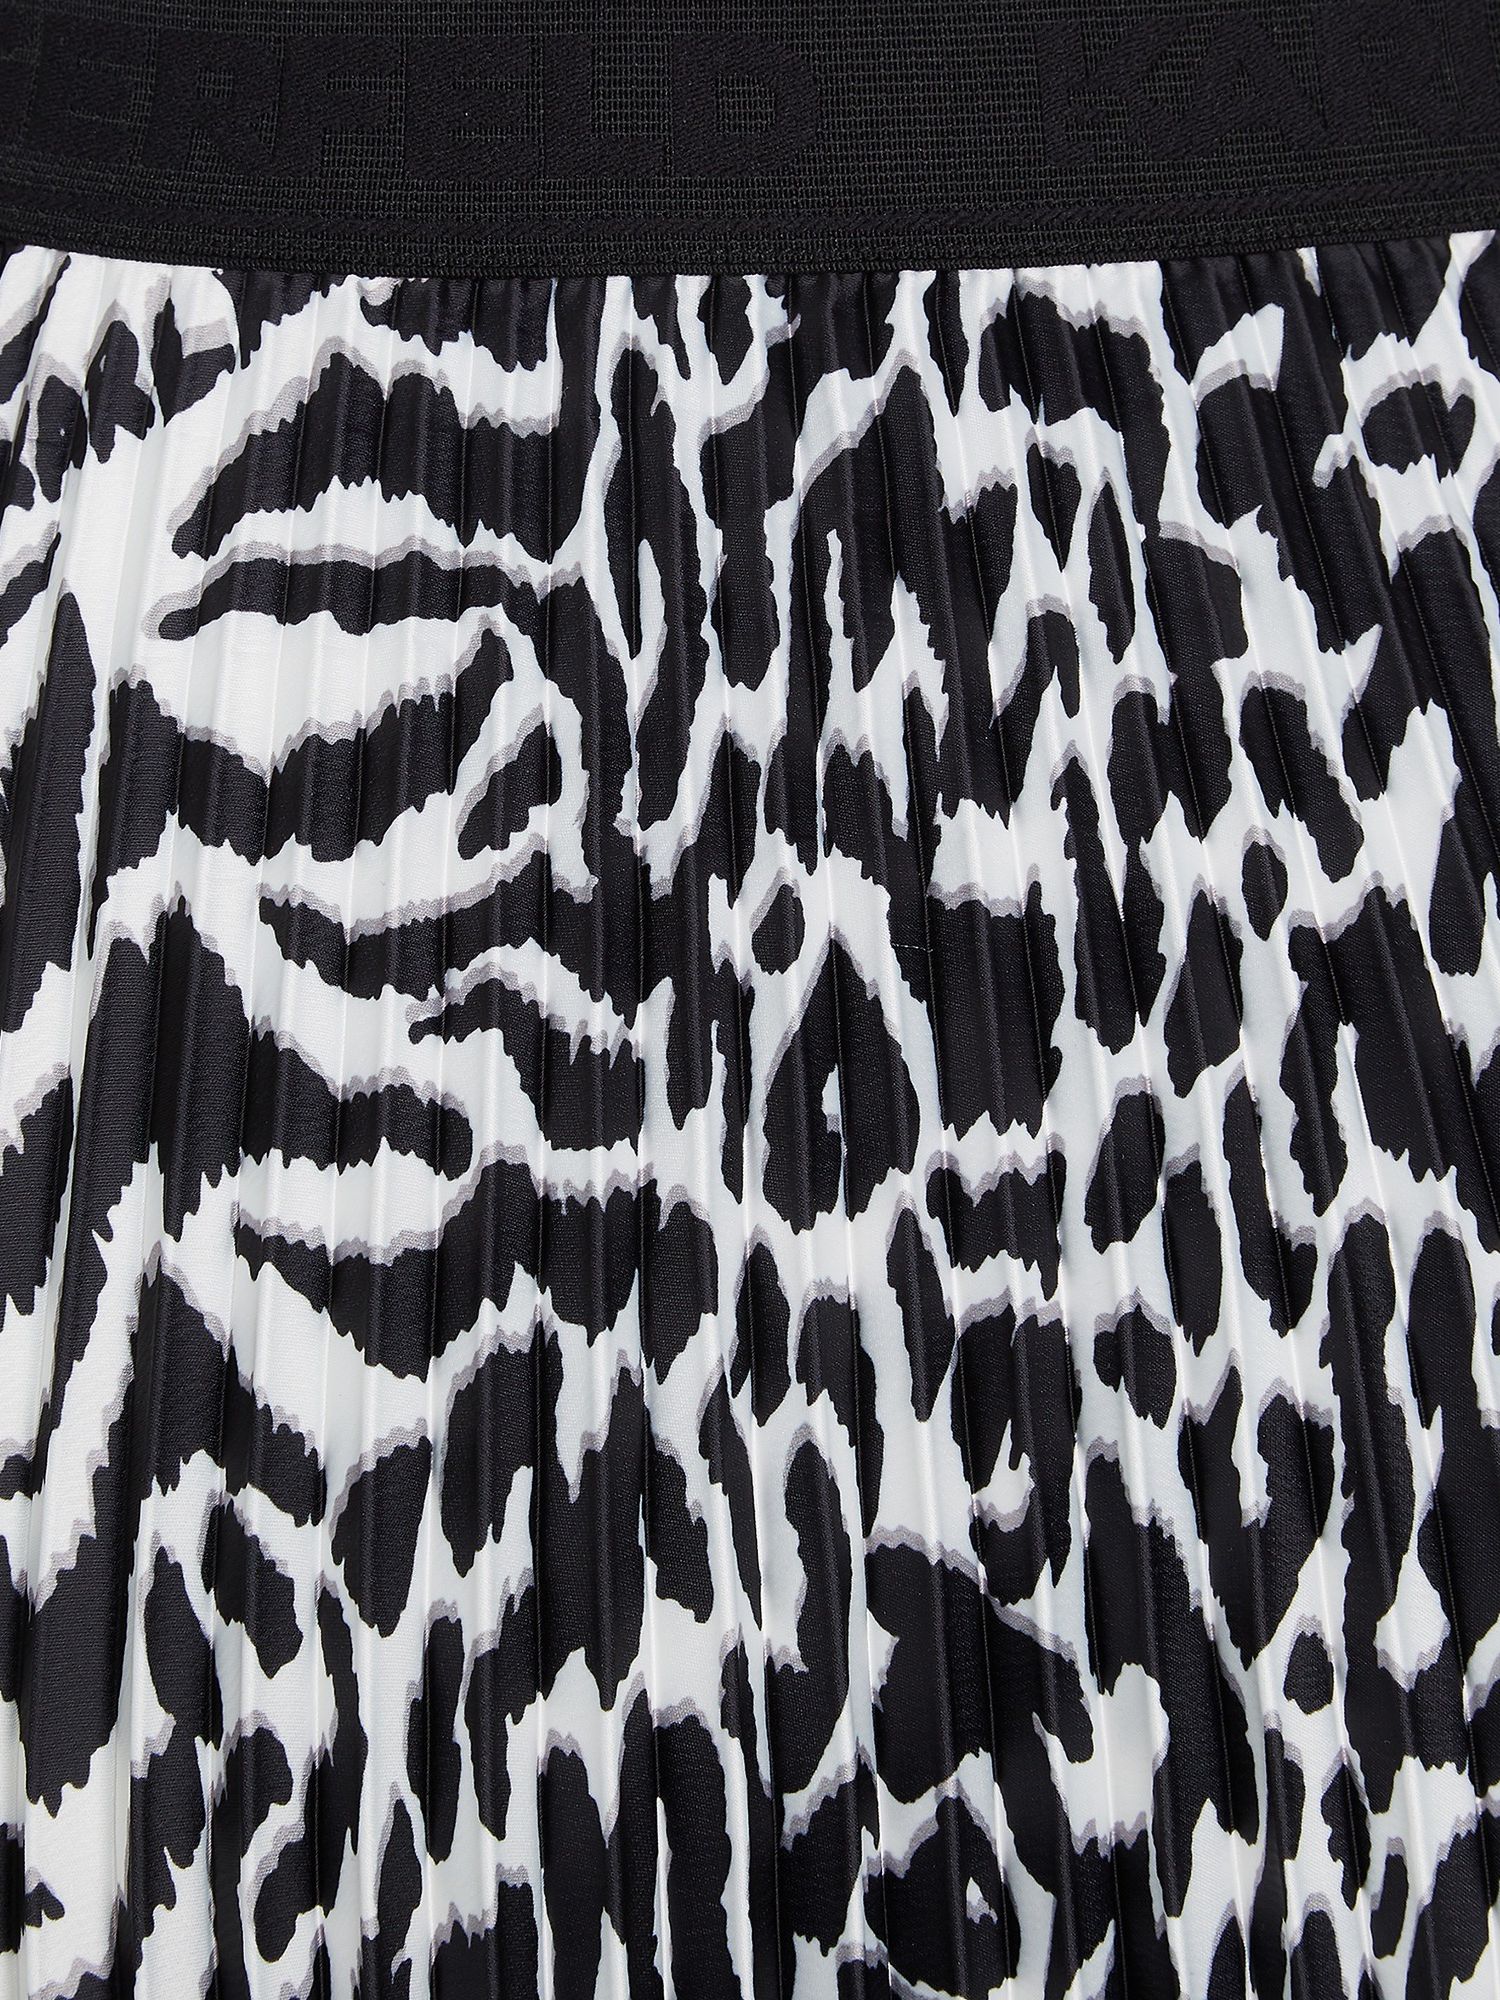 Buy KARL LAGERFELD Animal Print Pleated Midi Skirt, Black/White Online at johnlewis.com